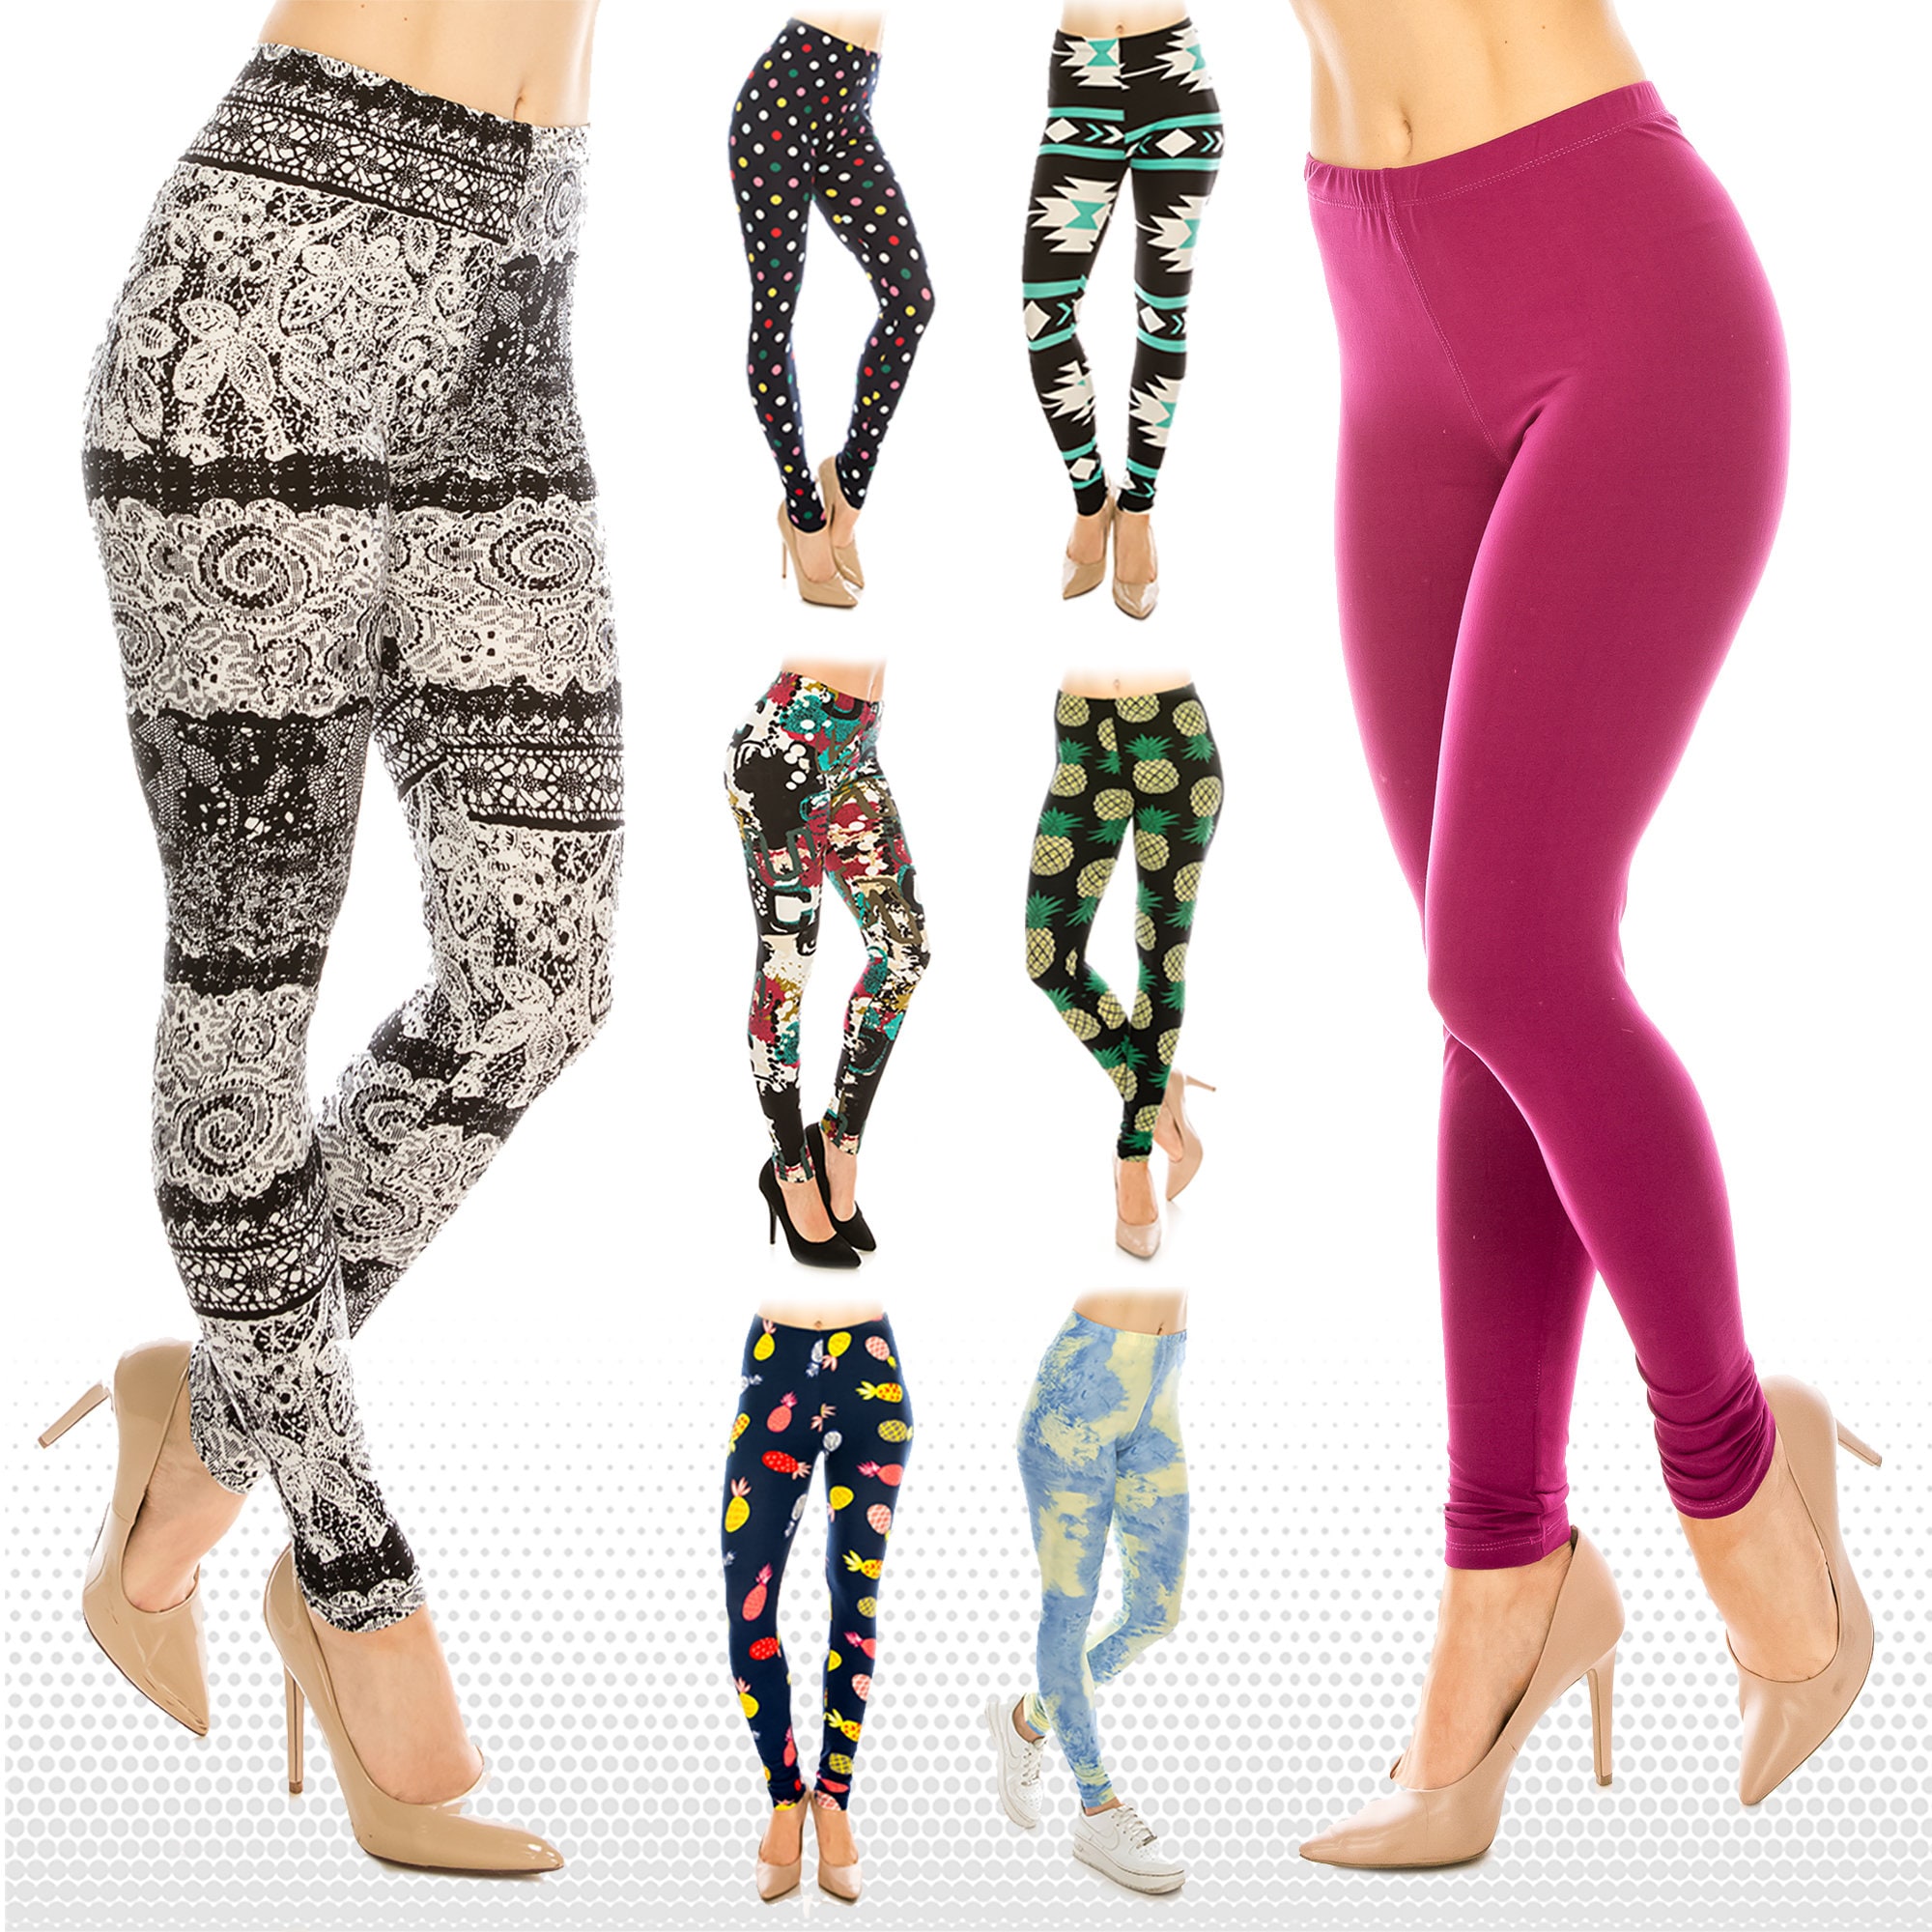 Shop Baddie Yoga Capri Leggings - Stylish and Functional